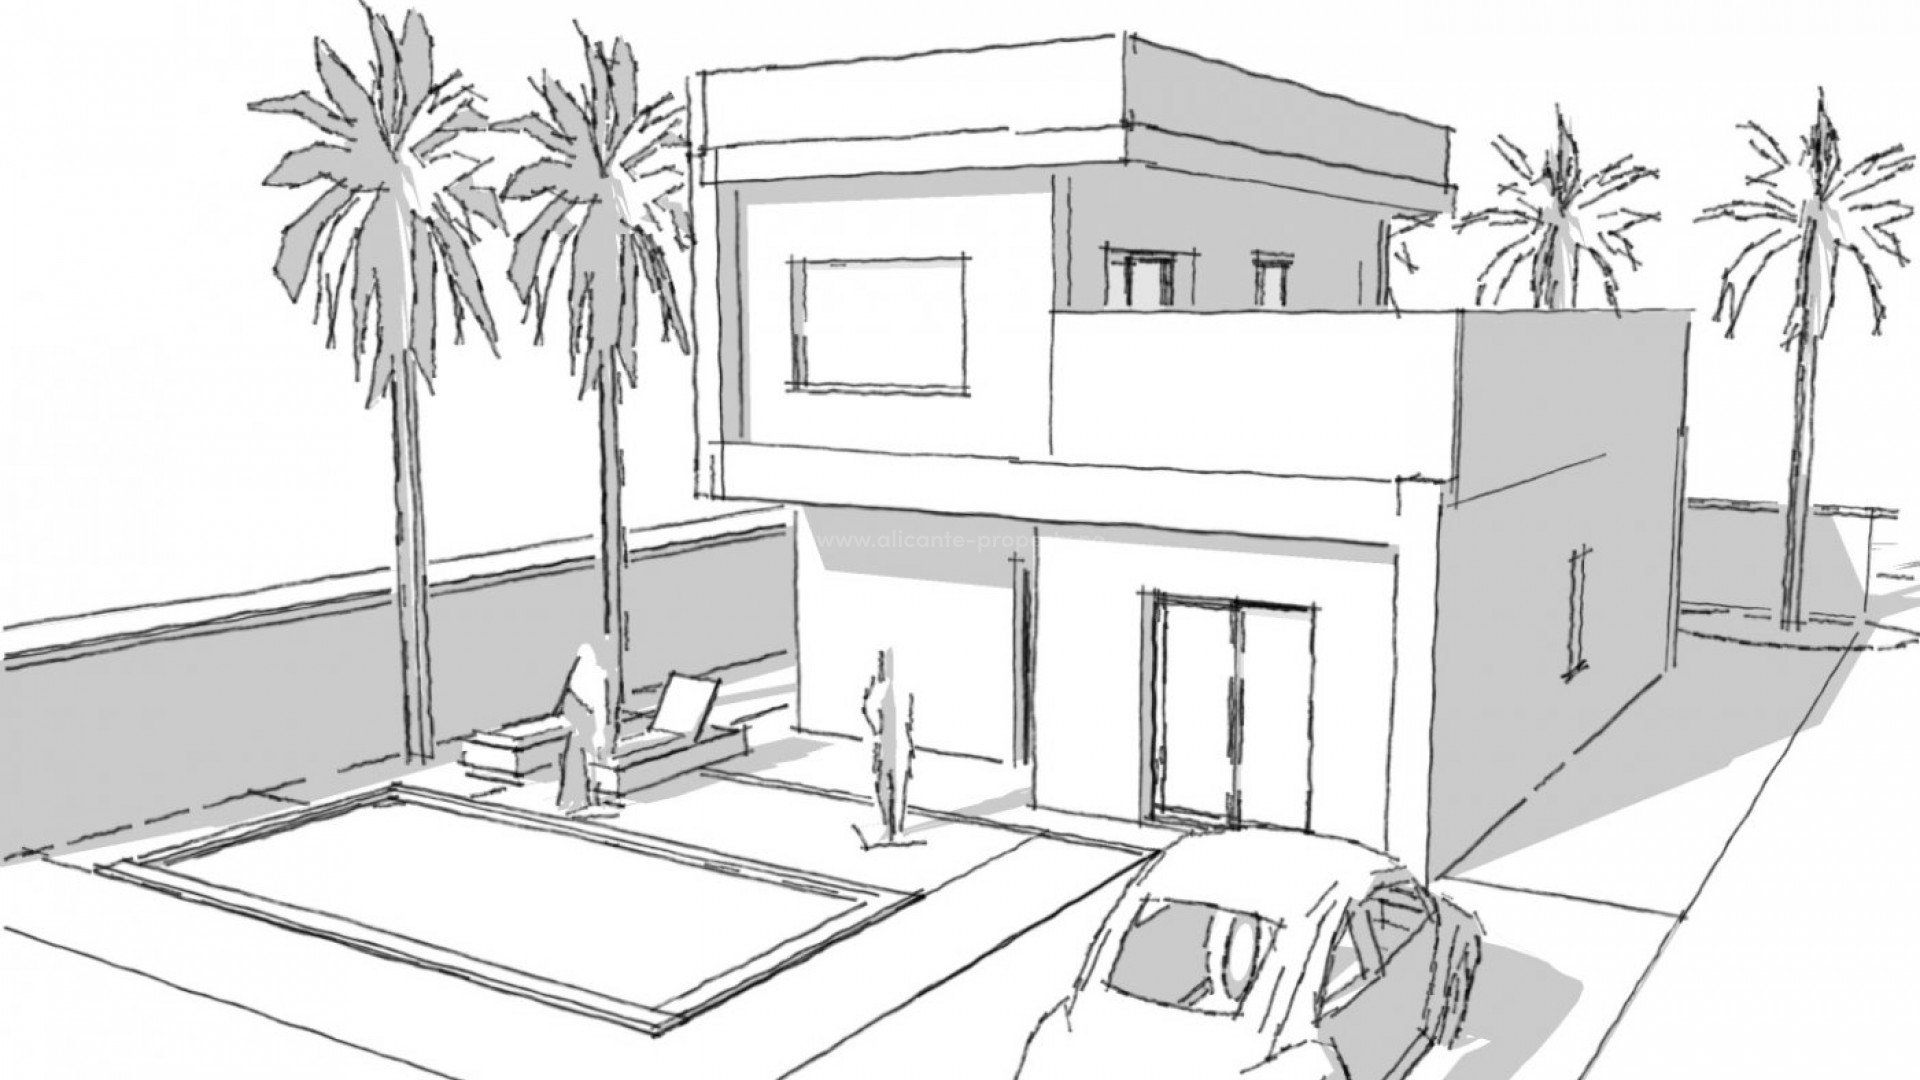 Villaer og rekkehus i Rojales, Ciudad Quesada,3 soverom, 2 bad, åpen kjøkkenløsning med stue og stor terrasse, plass til basseng, parkering